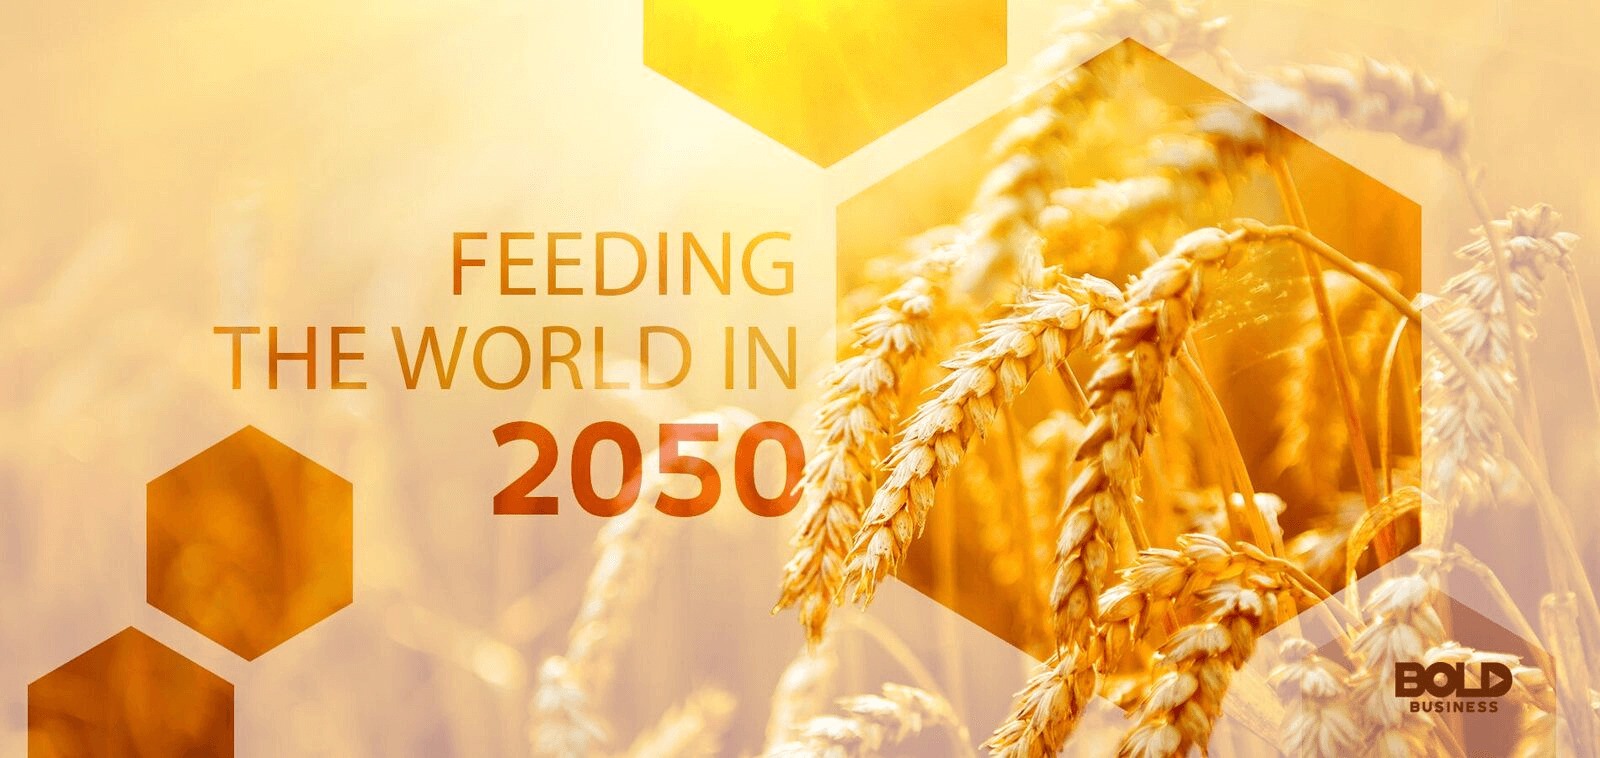 feeding the world in 2050 - wheat stalks